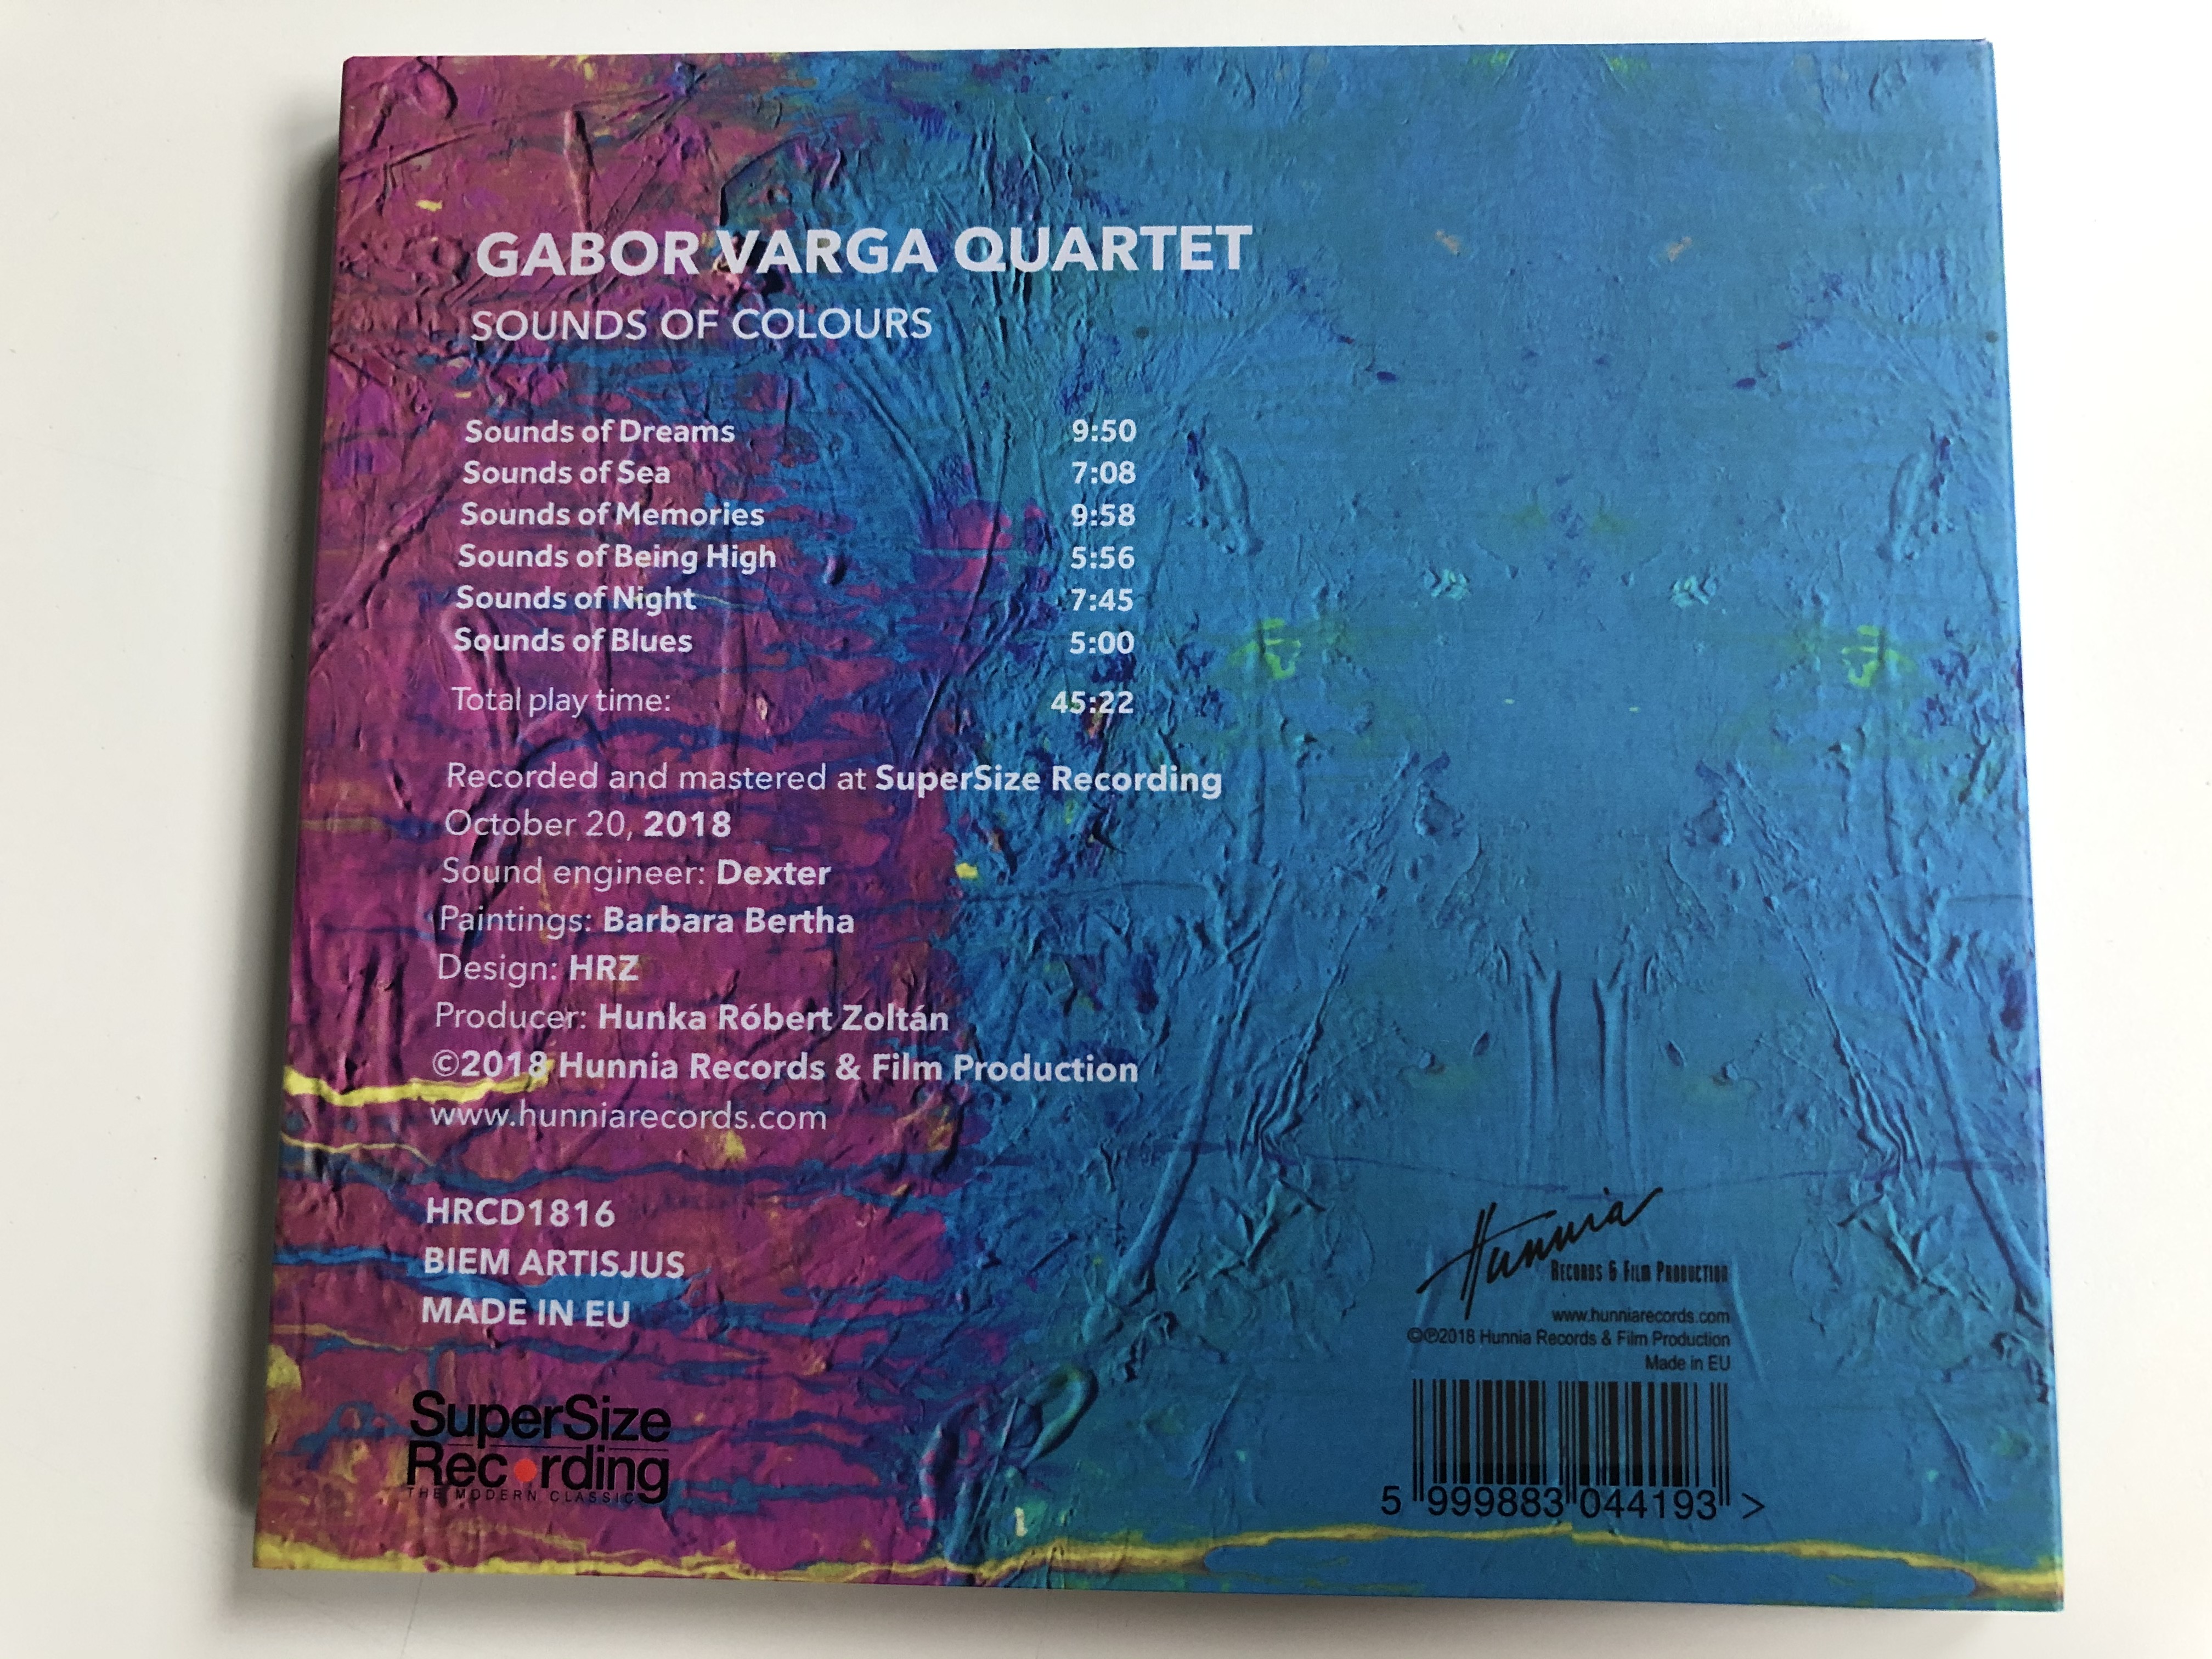 gabor-varga-quartet-sound-s-of-colours-hunnia-records-film-production-audio-cd-2018-hrcd1816-6-.jpg